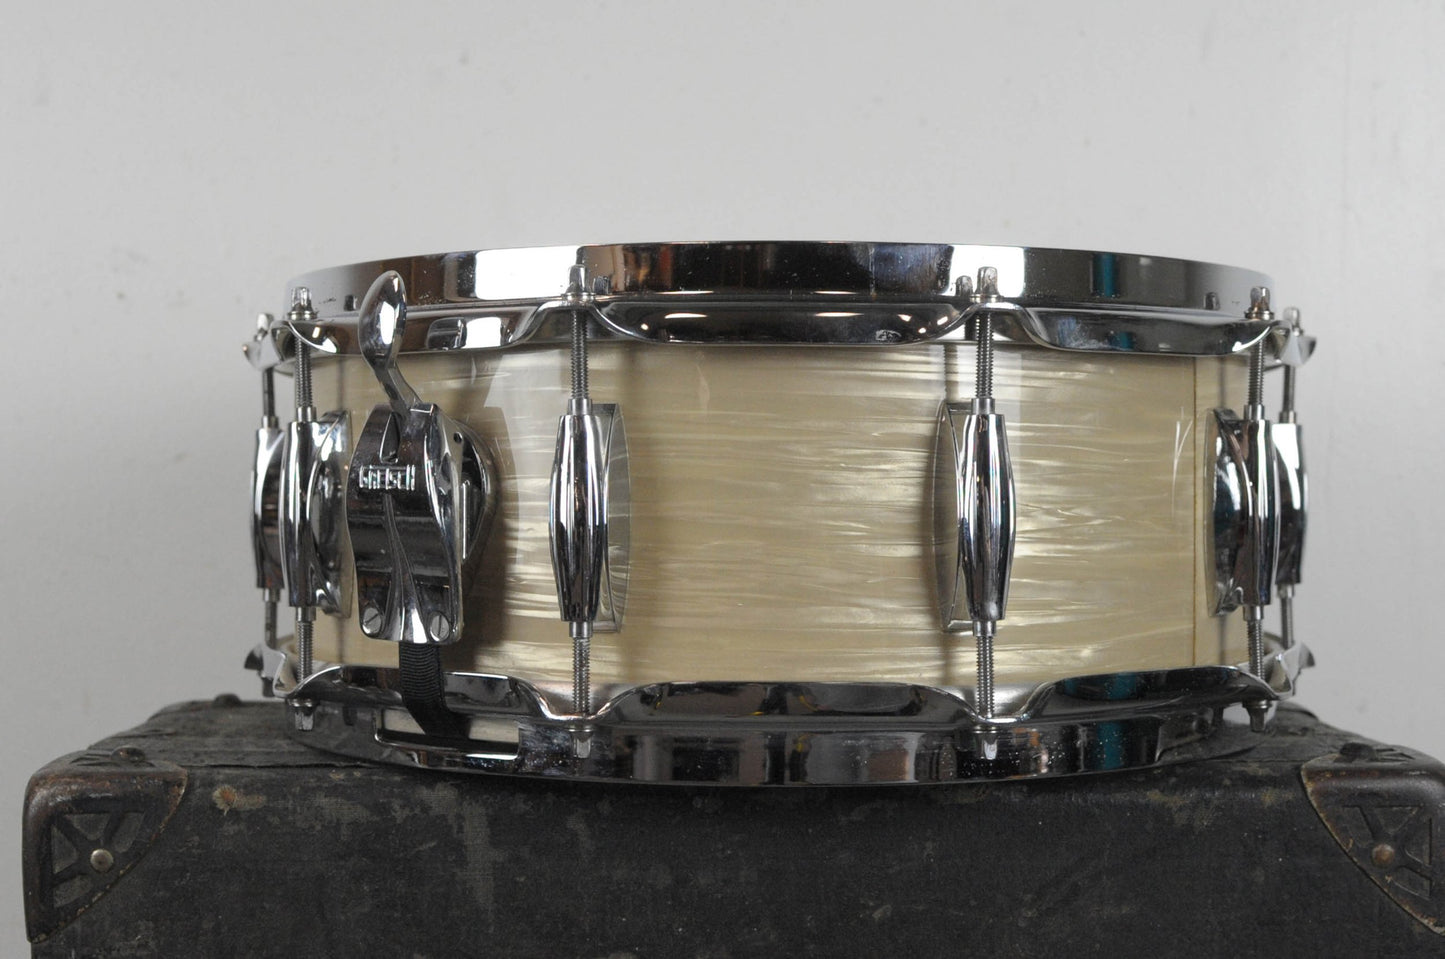 Gretsch Brooklyn 5.5x14 Creme Oyster Snare Drum